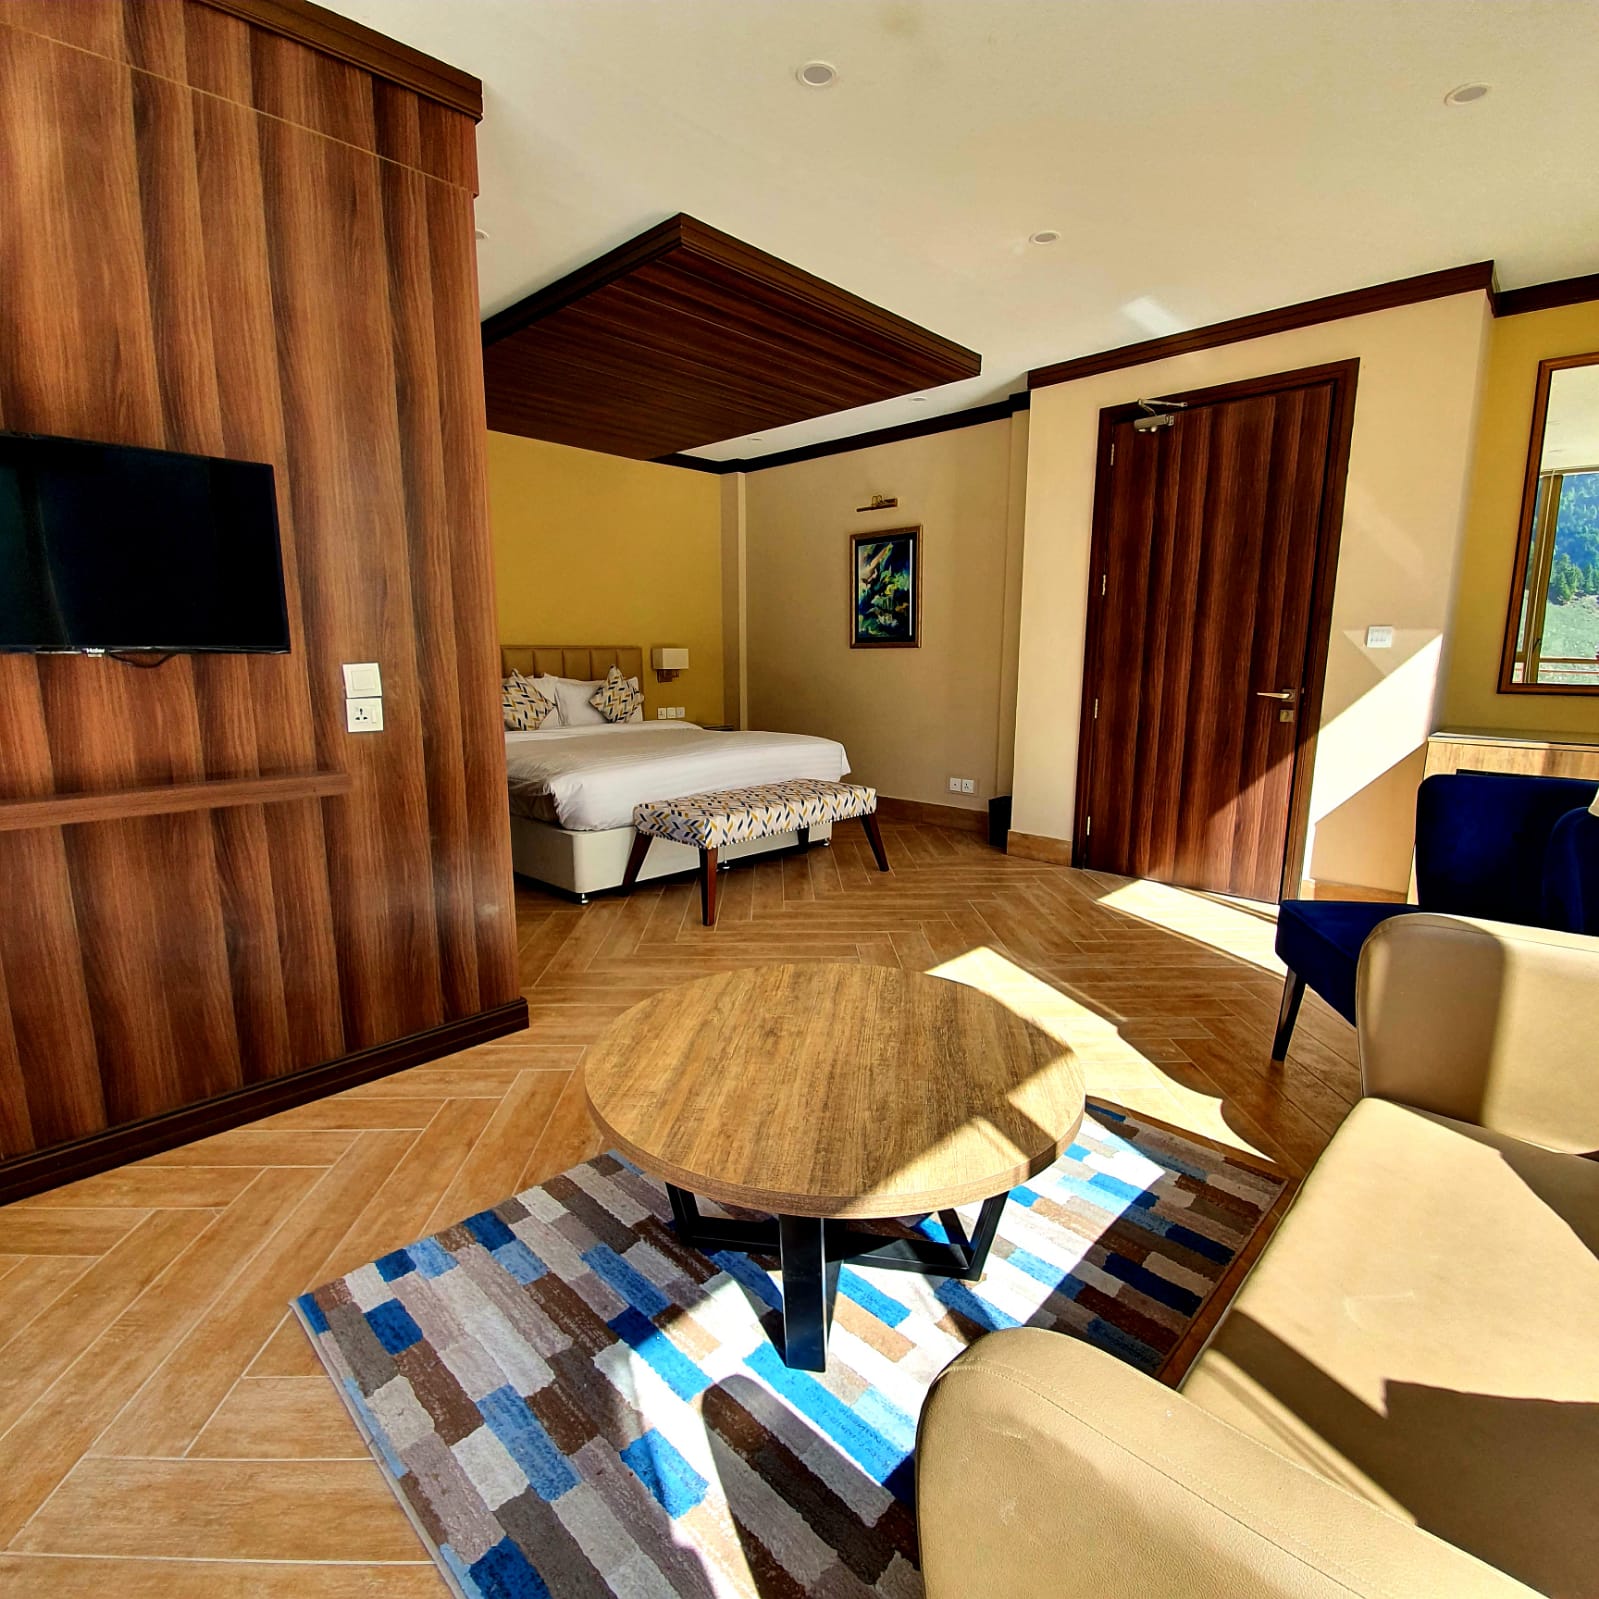 Bedroom of a Luxuy hotel in Naran